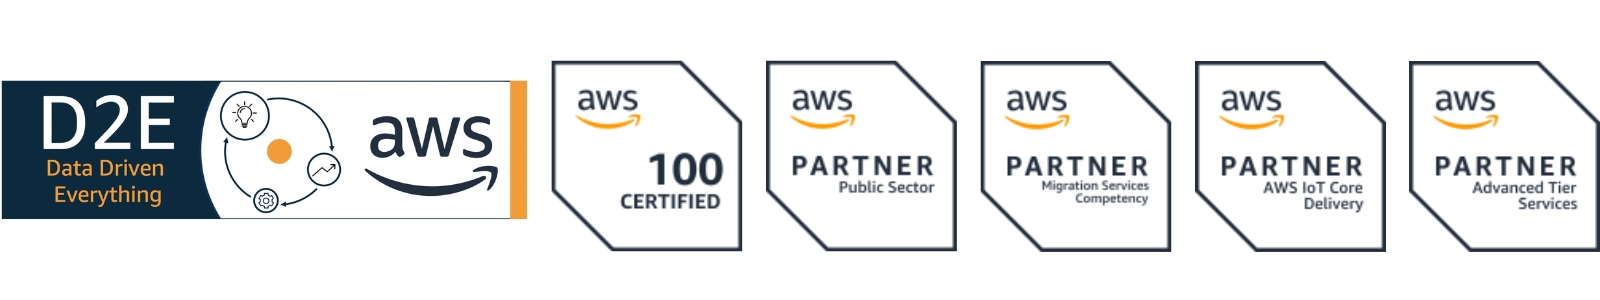 AWS certification badges